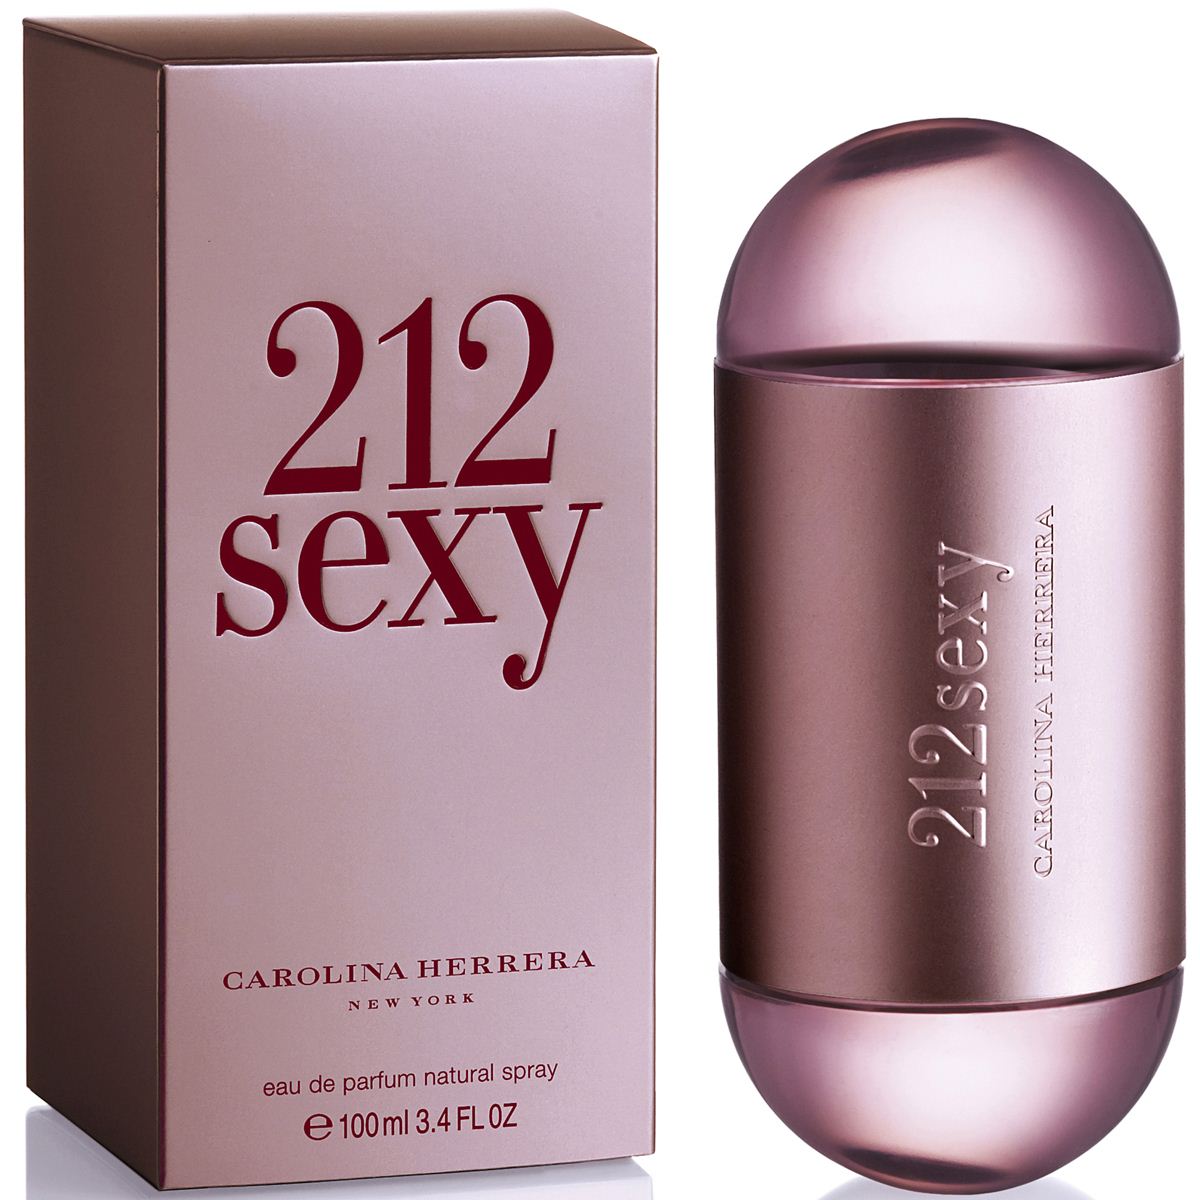 "212 Sexy" de Carolina Herrera